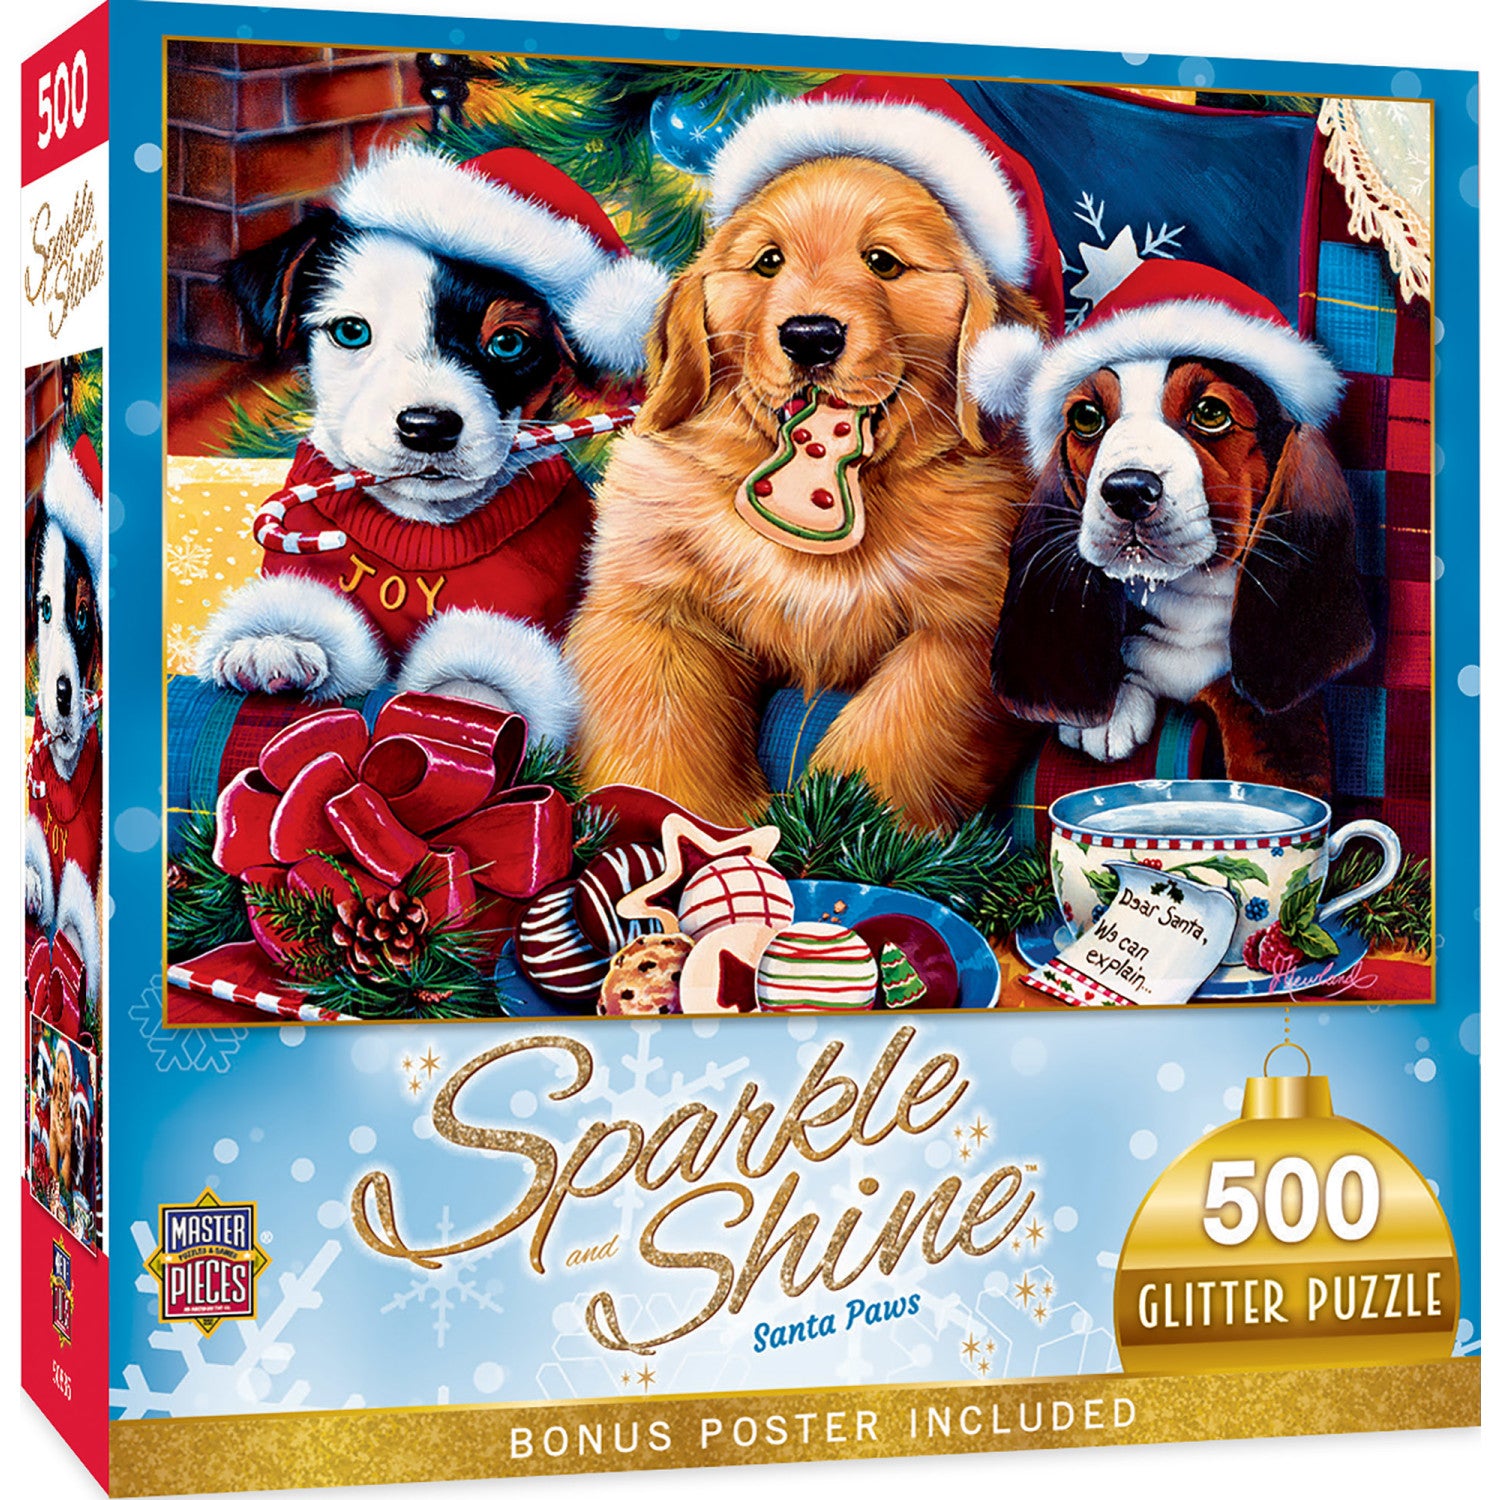 Sparkle & Shine - Santa Paws 500 Piece Glitter Puzzle